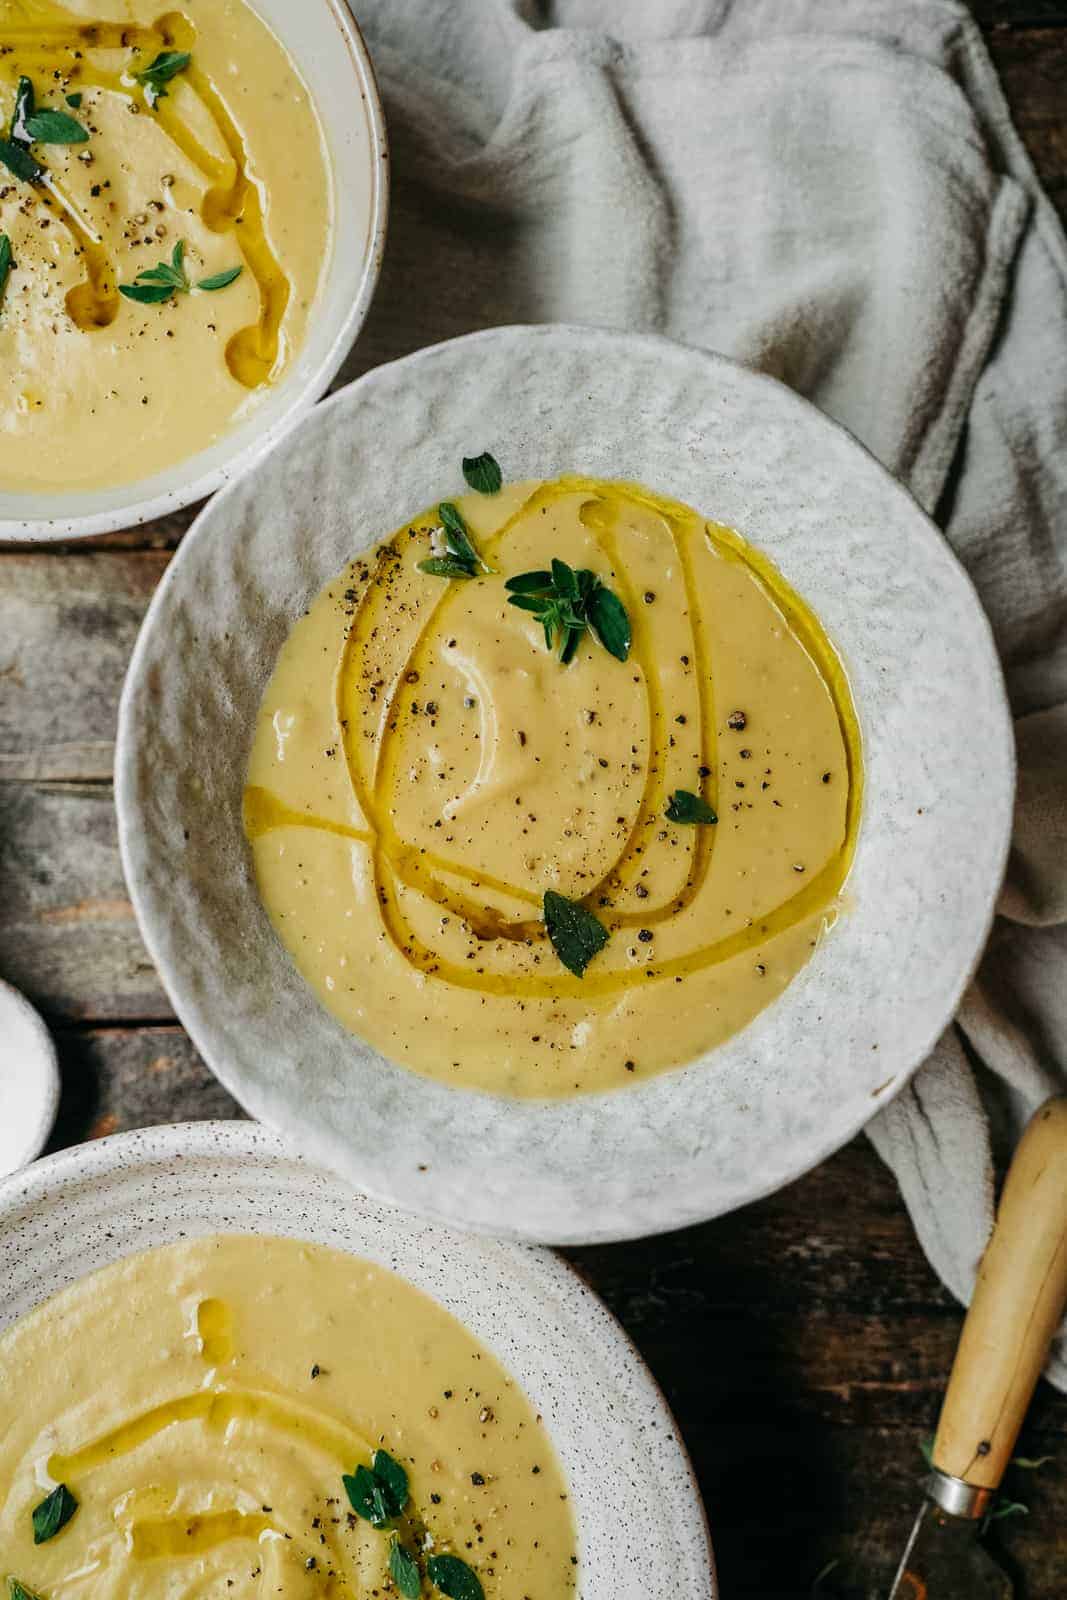 Vegan potato leek soup recipe that tastes amazing and is so easy to cook